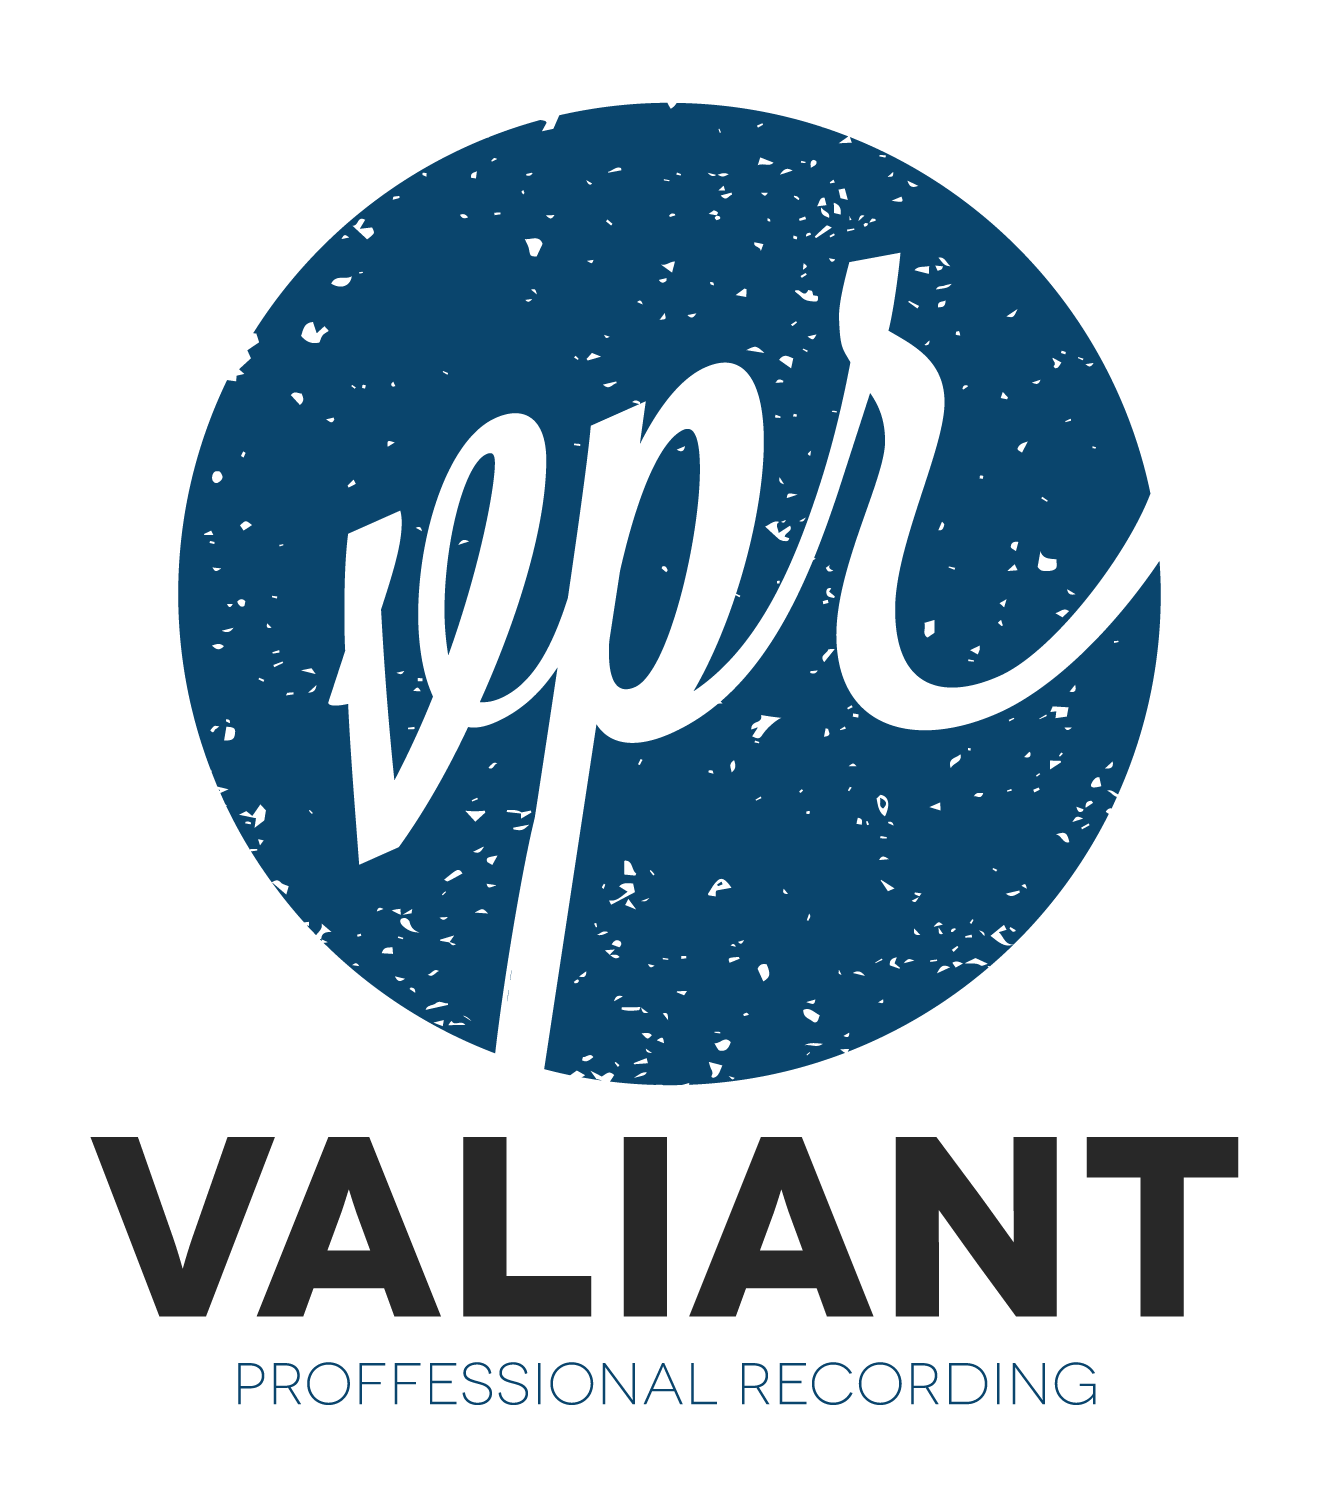 valiant_logo_color.png